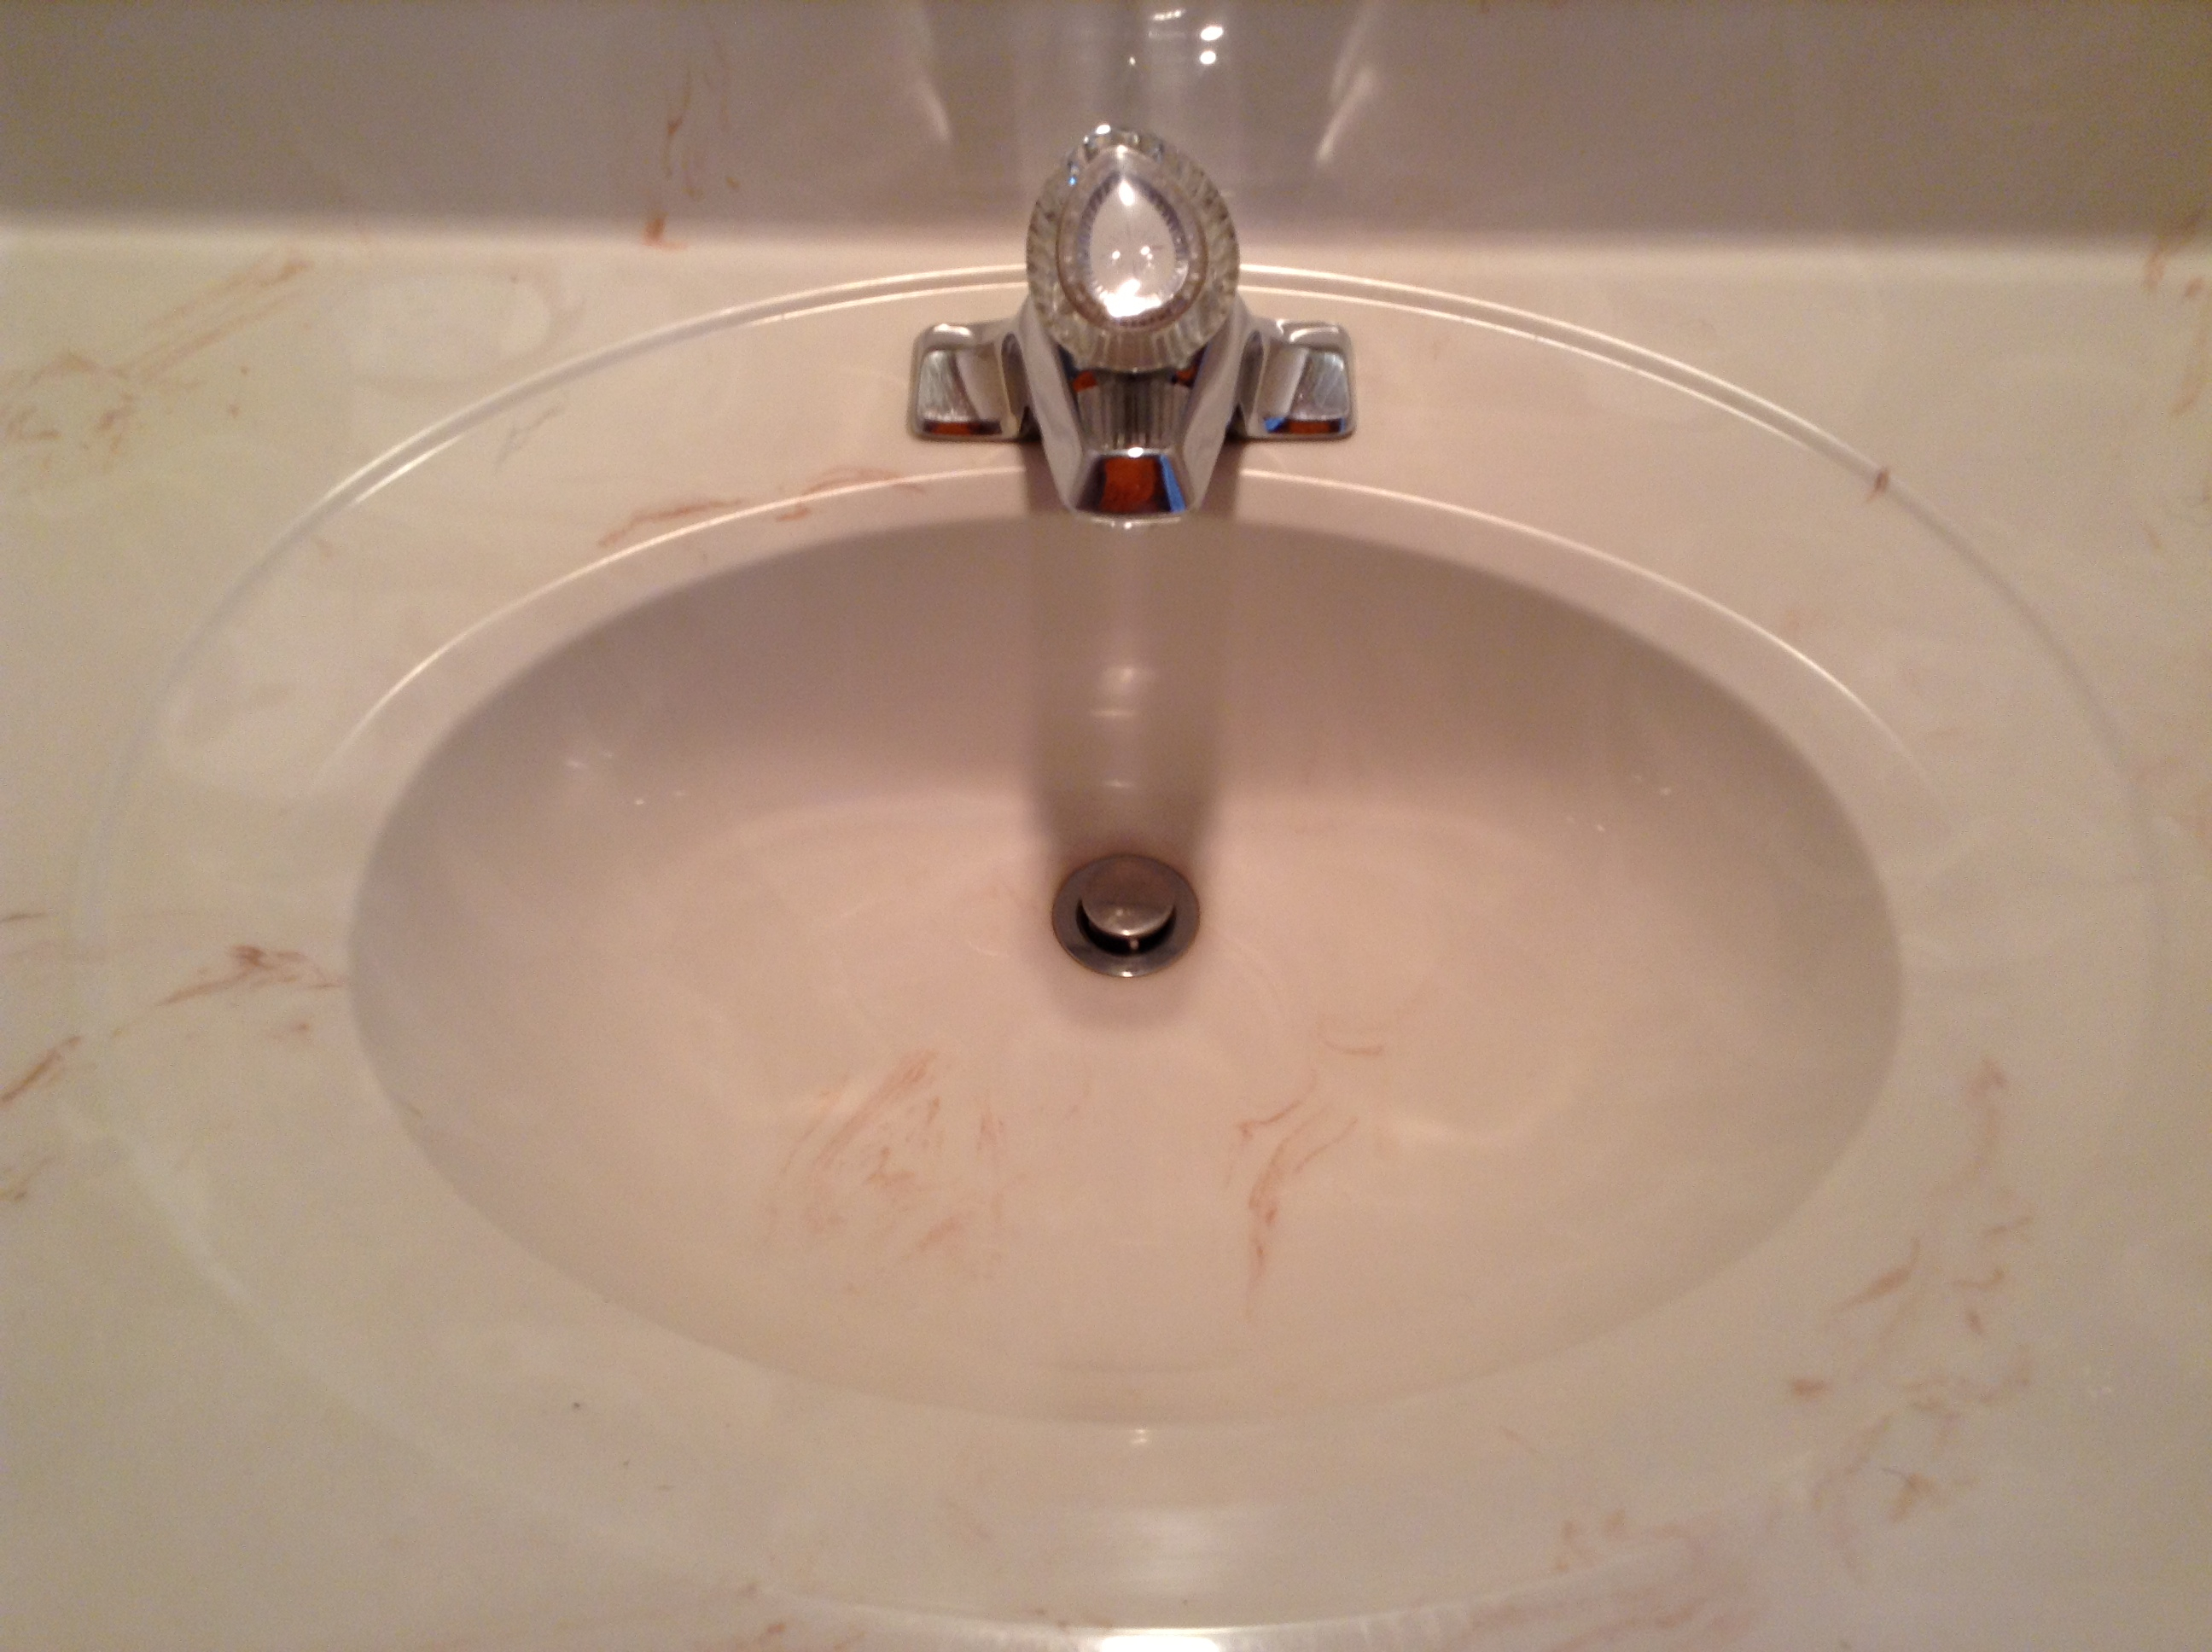 domestic kitchen sink bacteria study